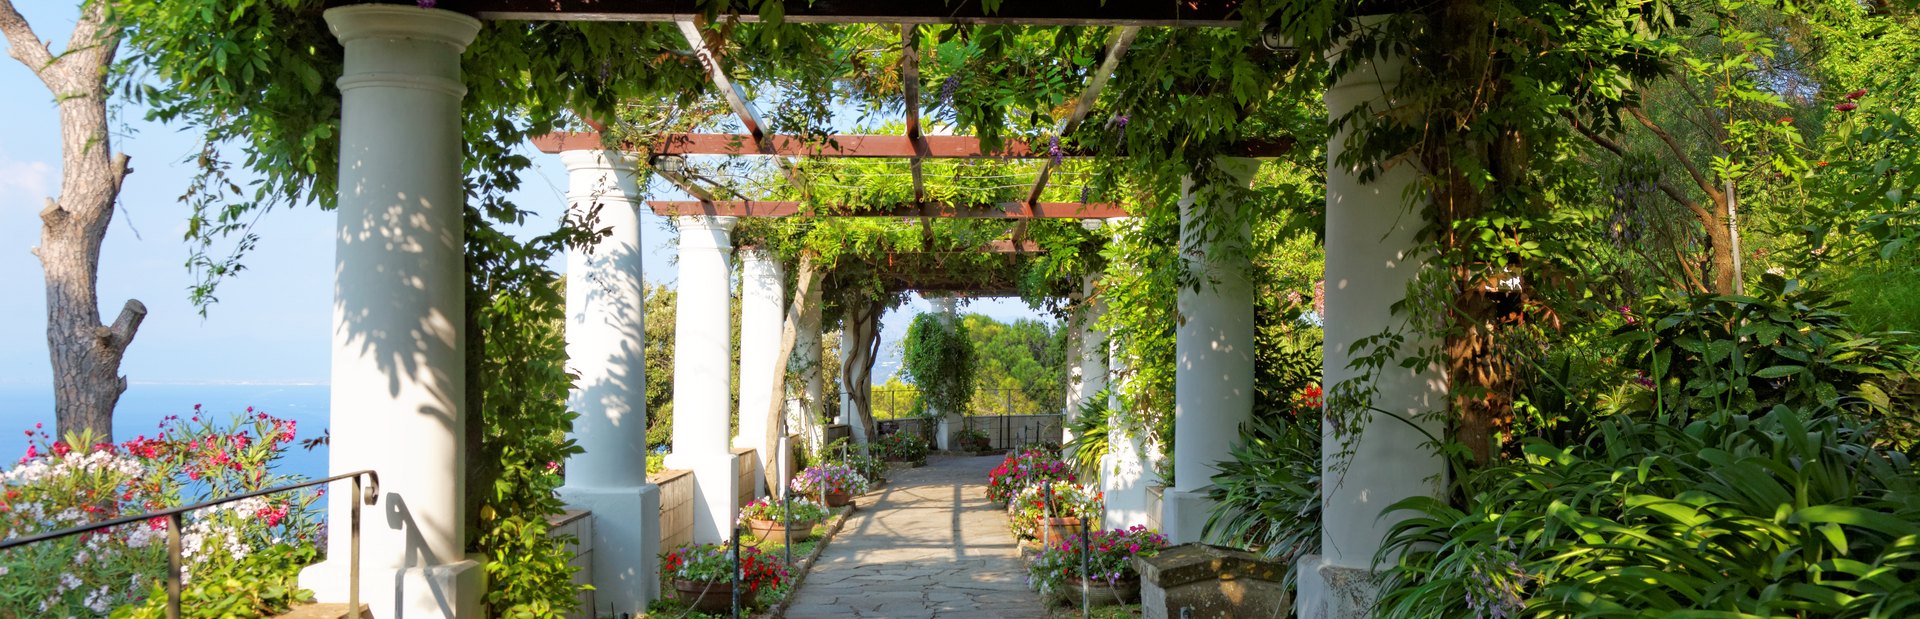 Find serenity in the public gardens of Capri